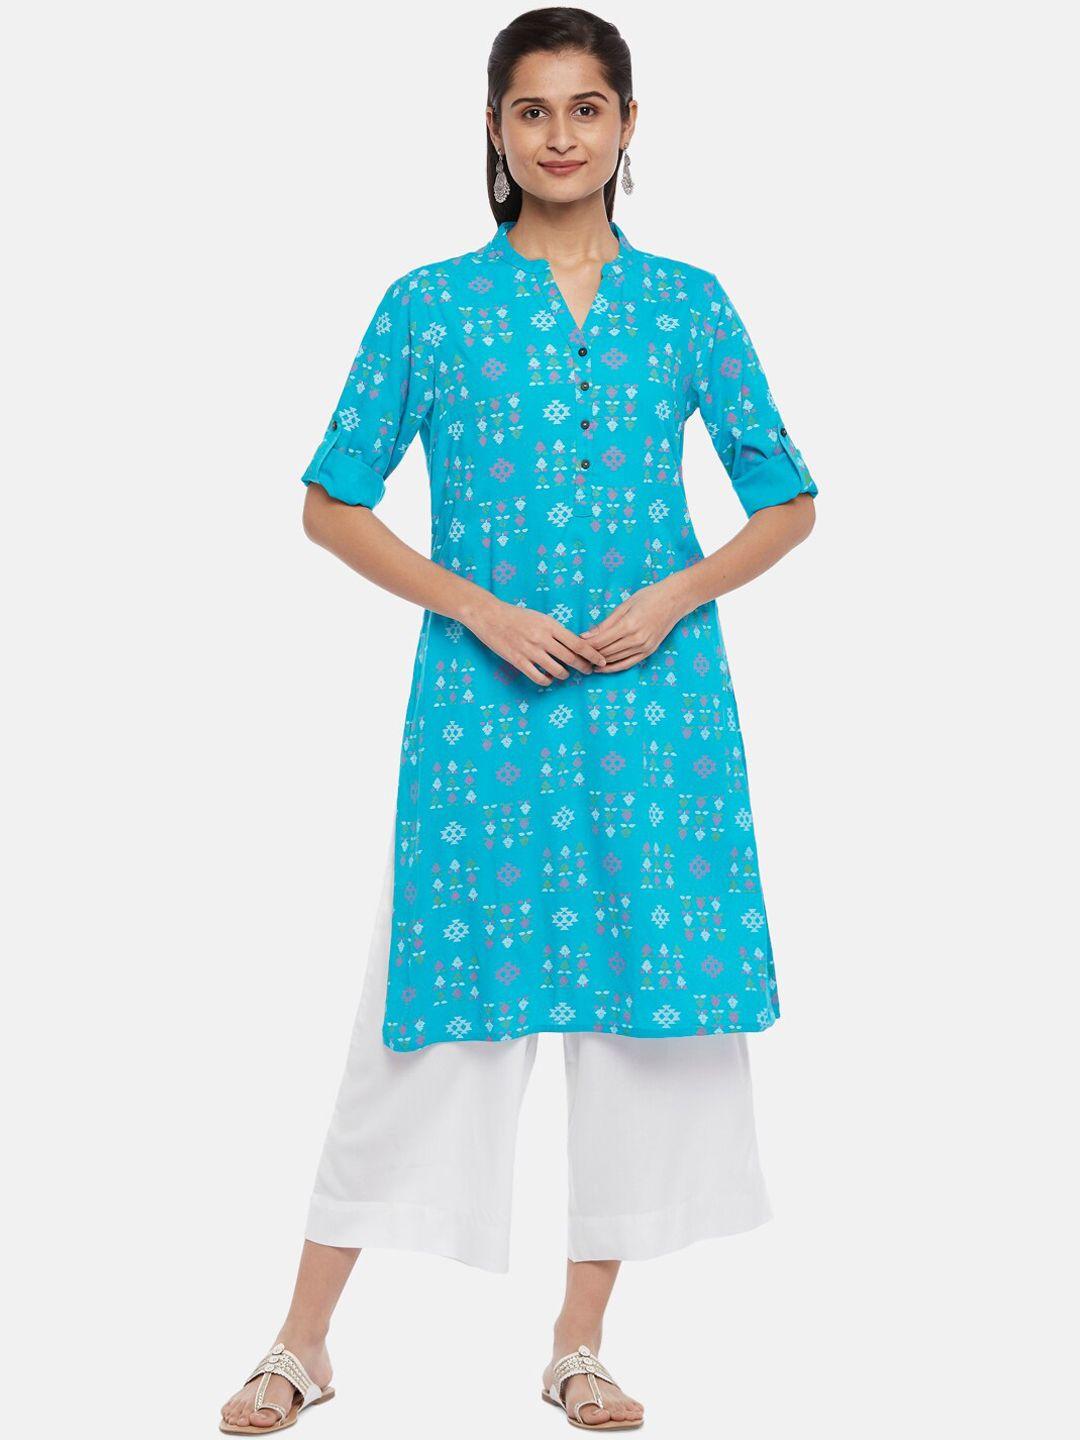 rangmanch by pantaloons women blue ethnic motifs printed kurta with trousers